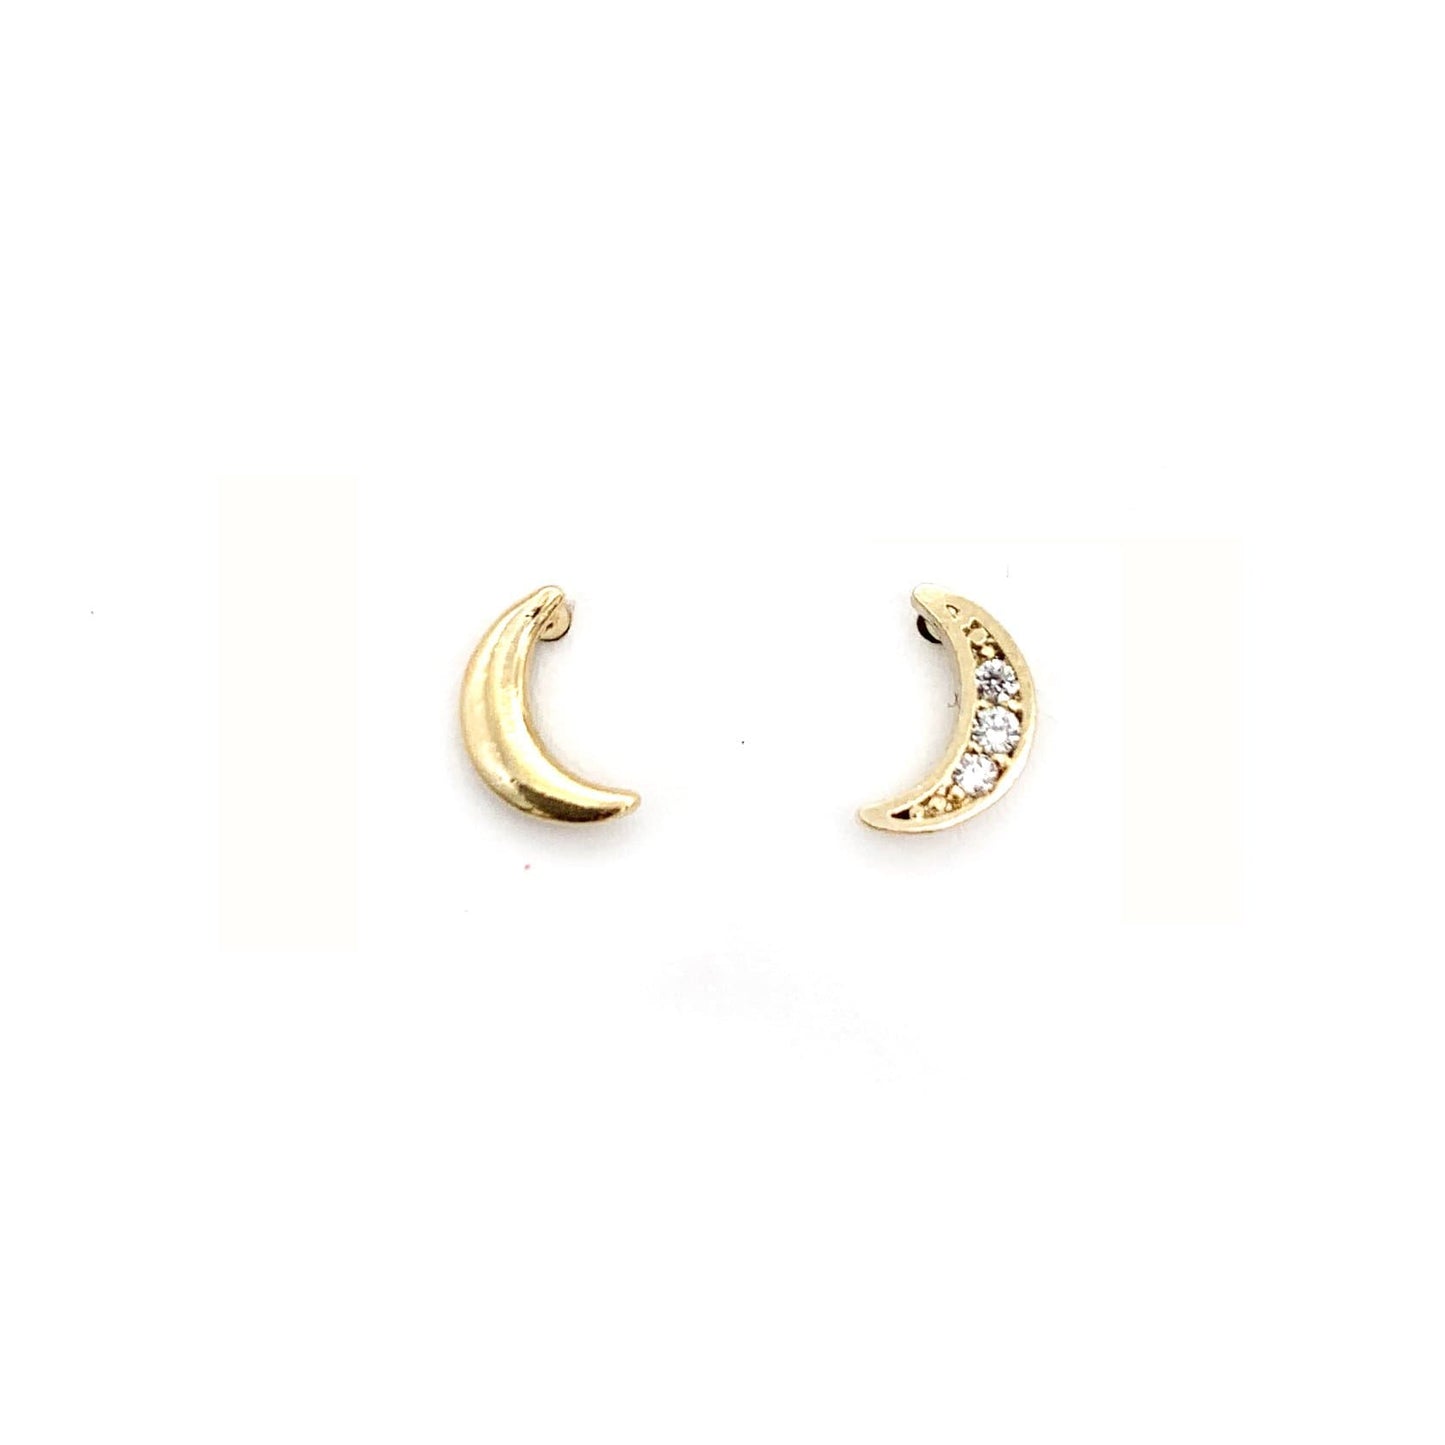  Luna Stud, Earrings, Adorn512, adorn512